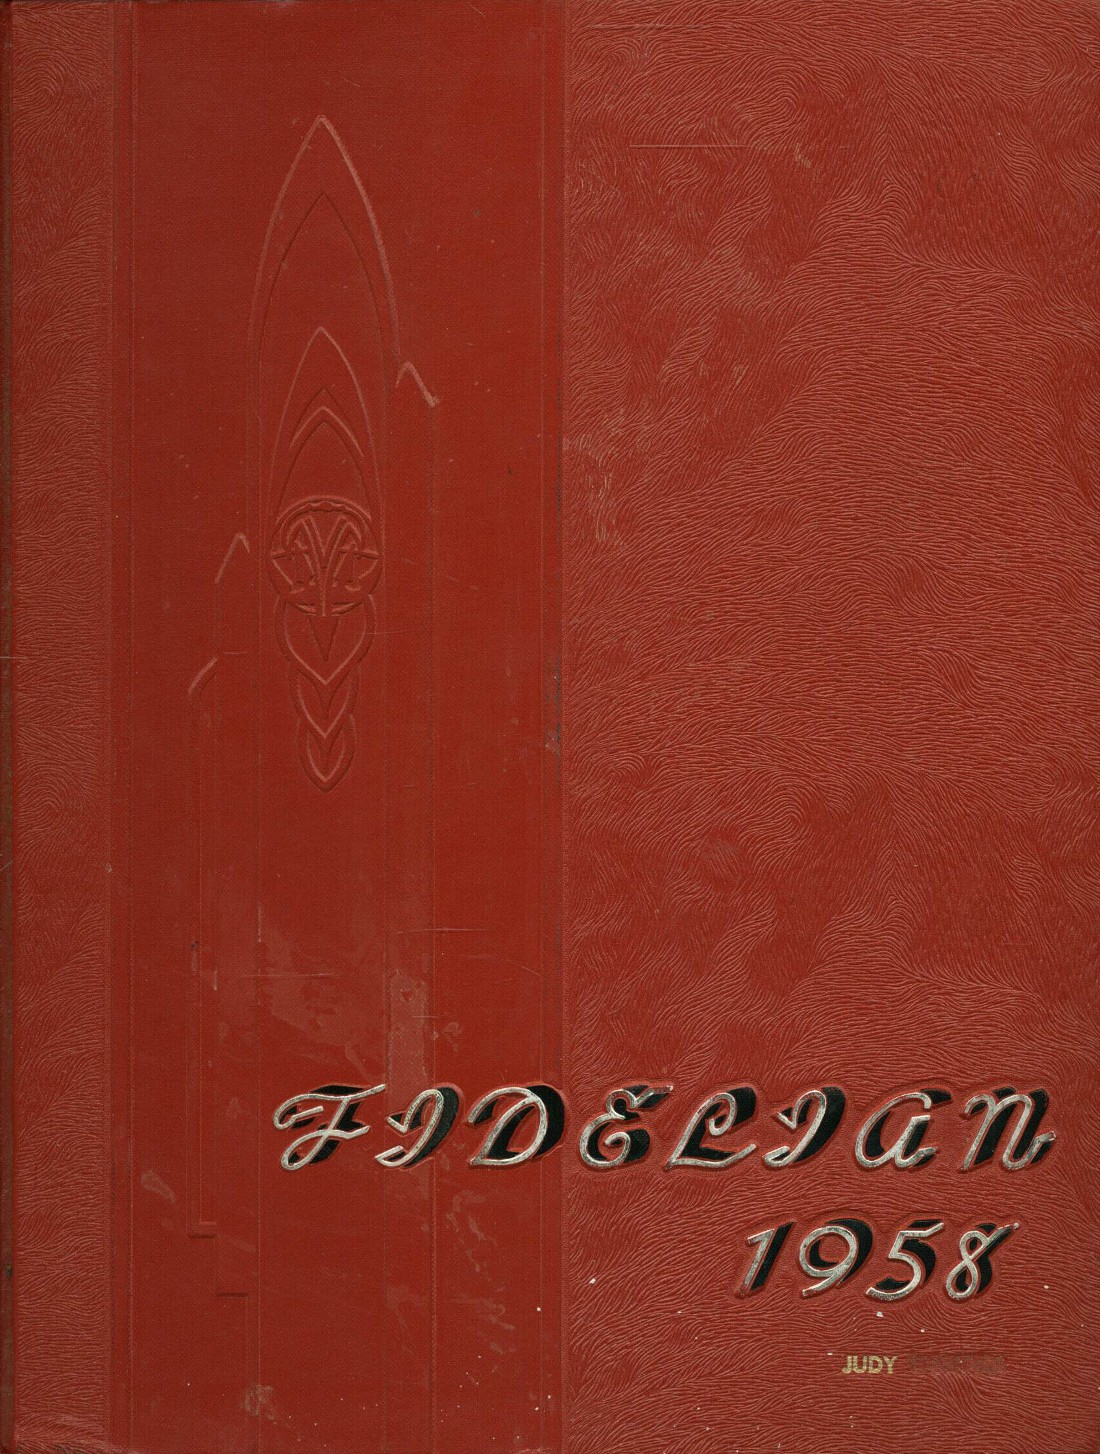 1958 yearbook from Pomona Catholic High School from Pomona, California